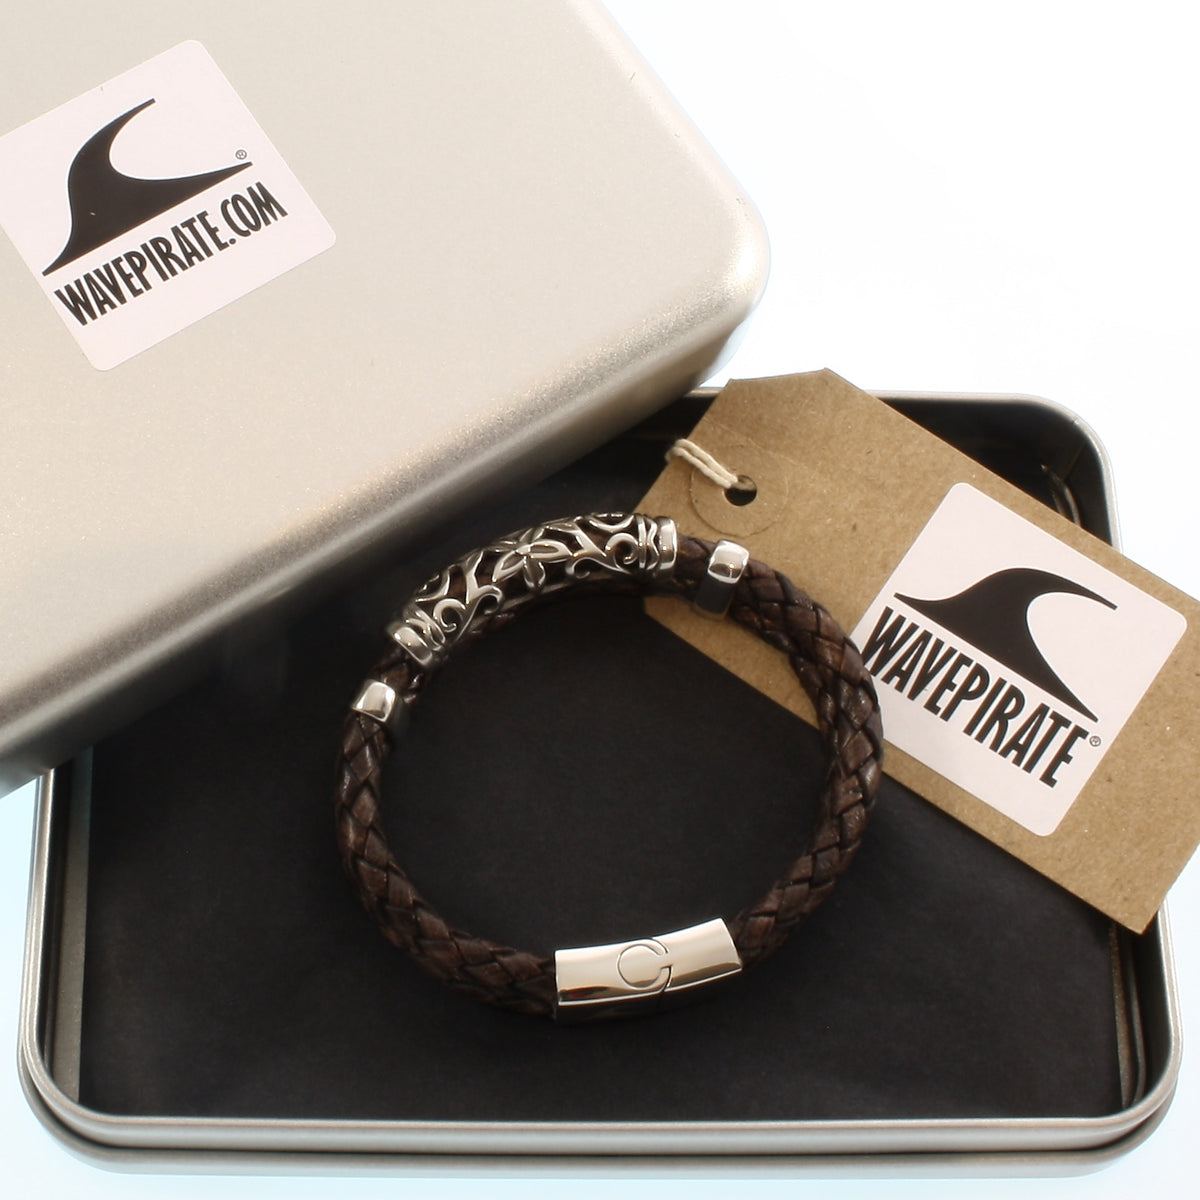 Herren-Leder-Armband-xo-braun-geflochten-Edelstahlverschluss-geschenkverpackung-wavepirate-shop-f